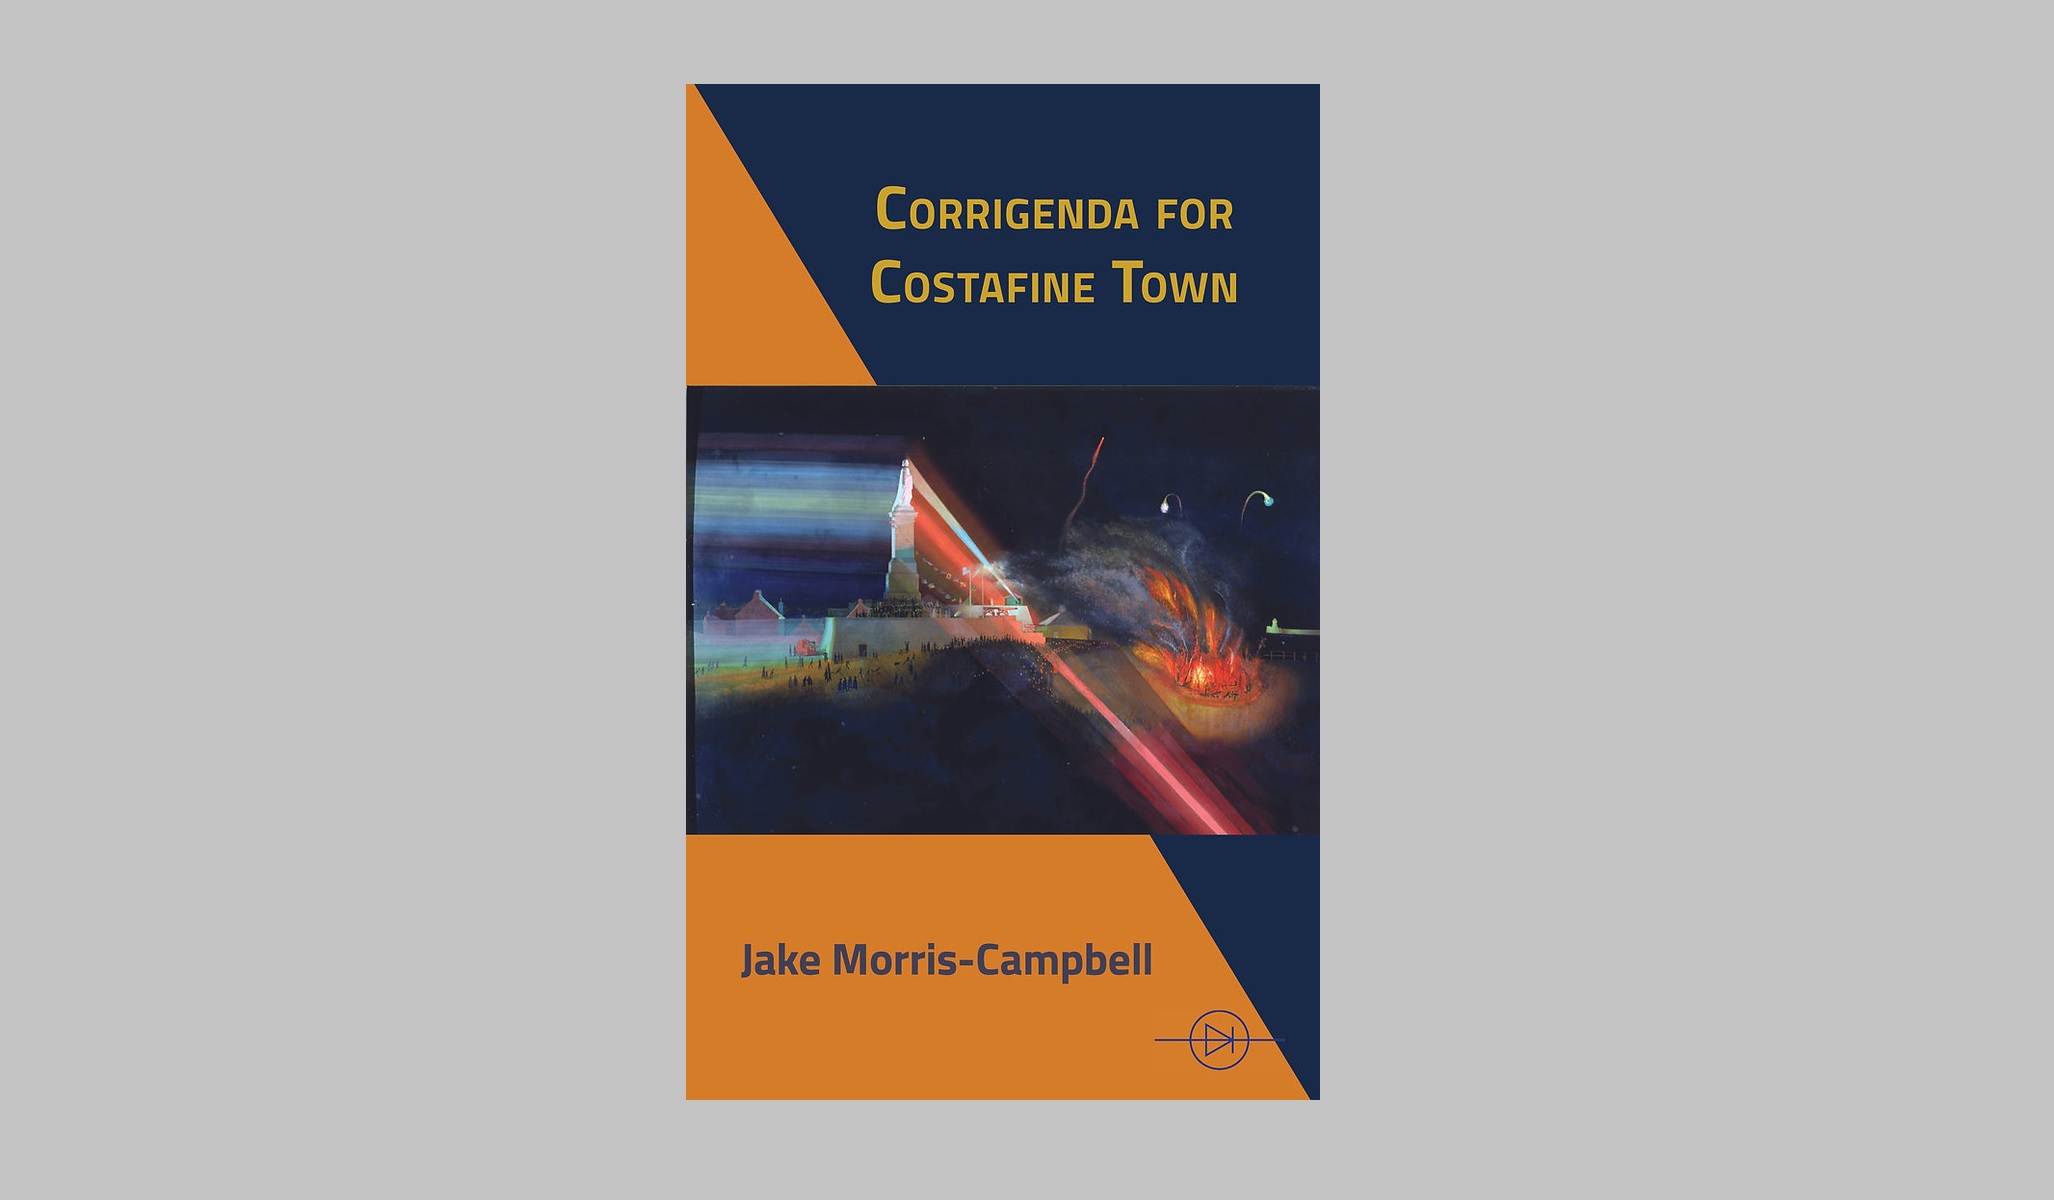 On ‘Corrigenda for Costafine Town’ by Jake Morris-Campbell